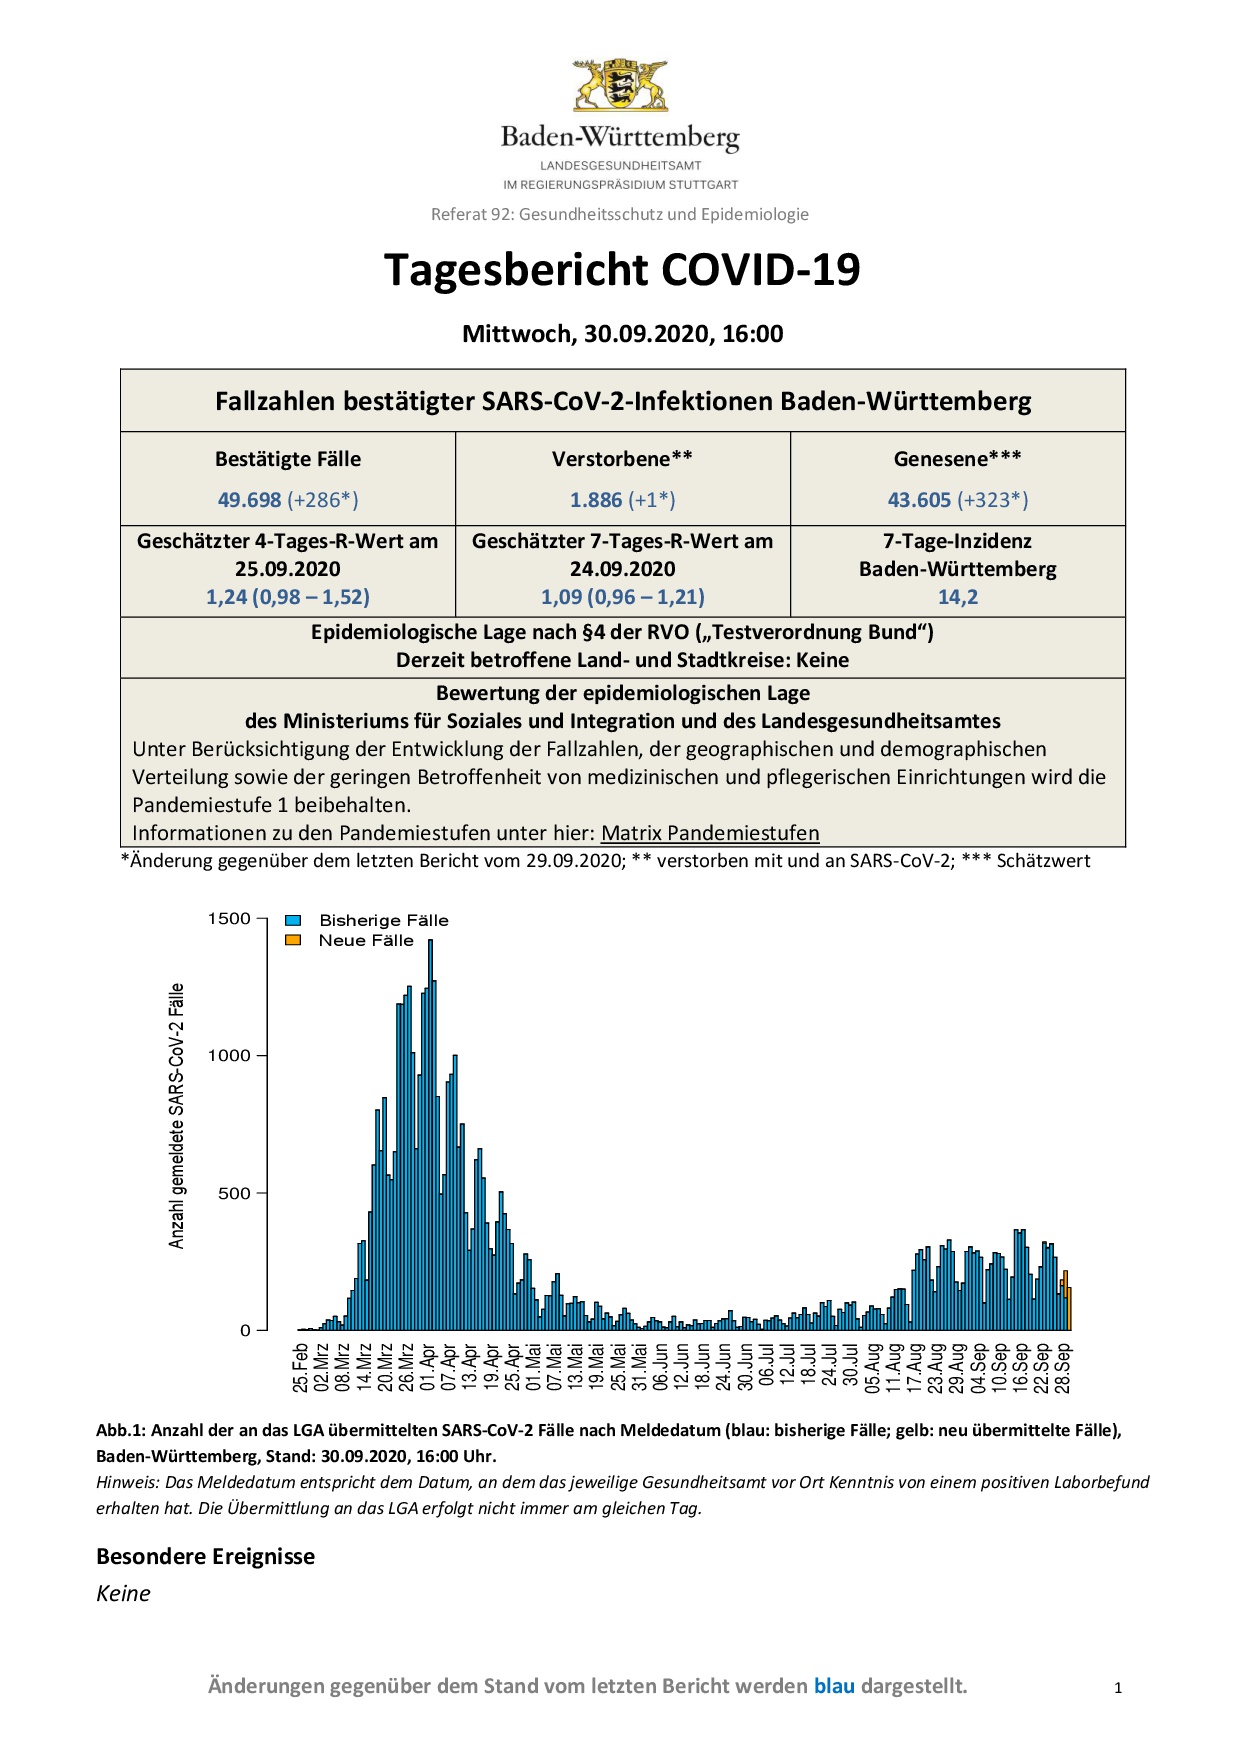 COVID-19 Tagesbericht (30.09.2020) des Landesgesundheitsamts Baden-Württemberg